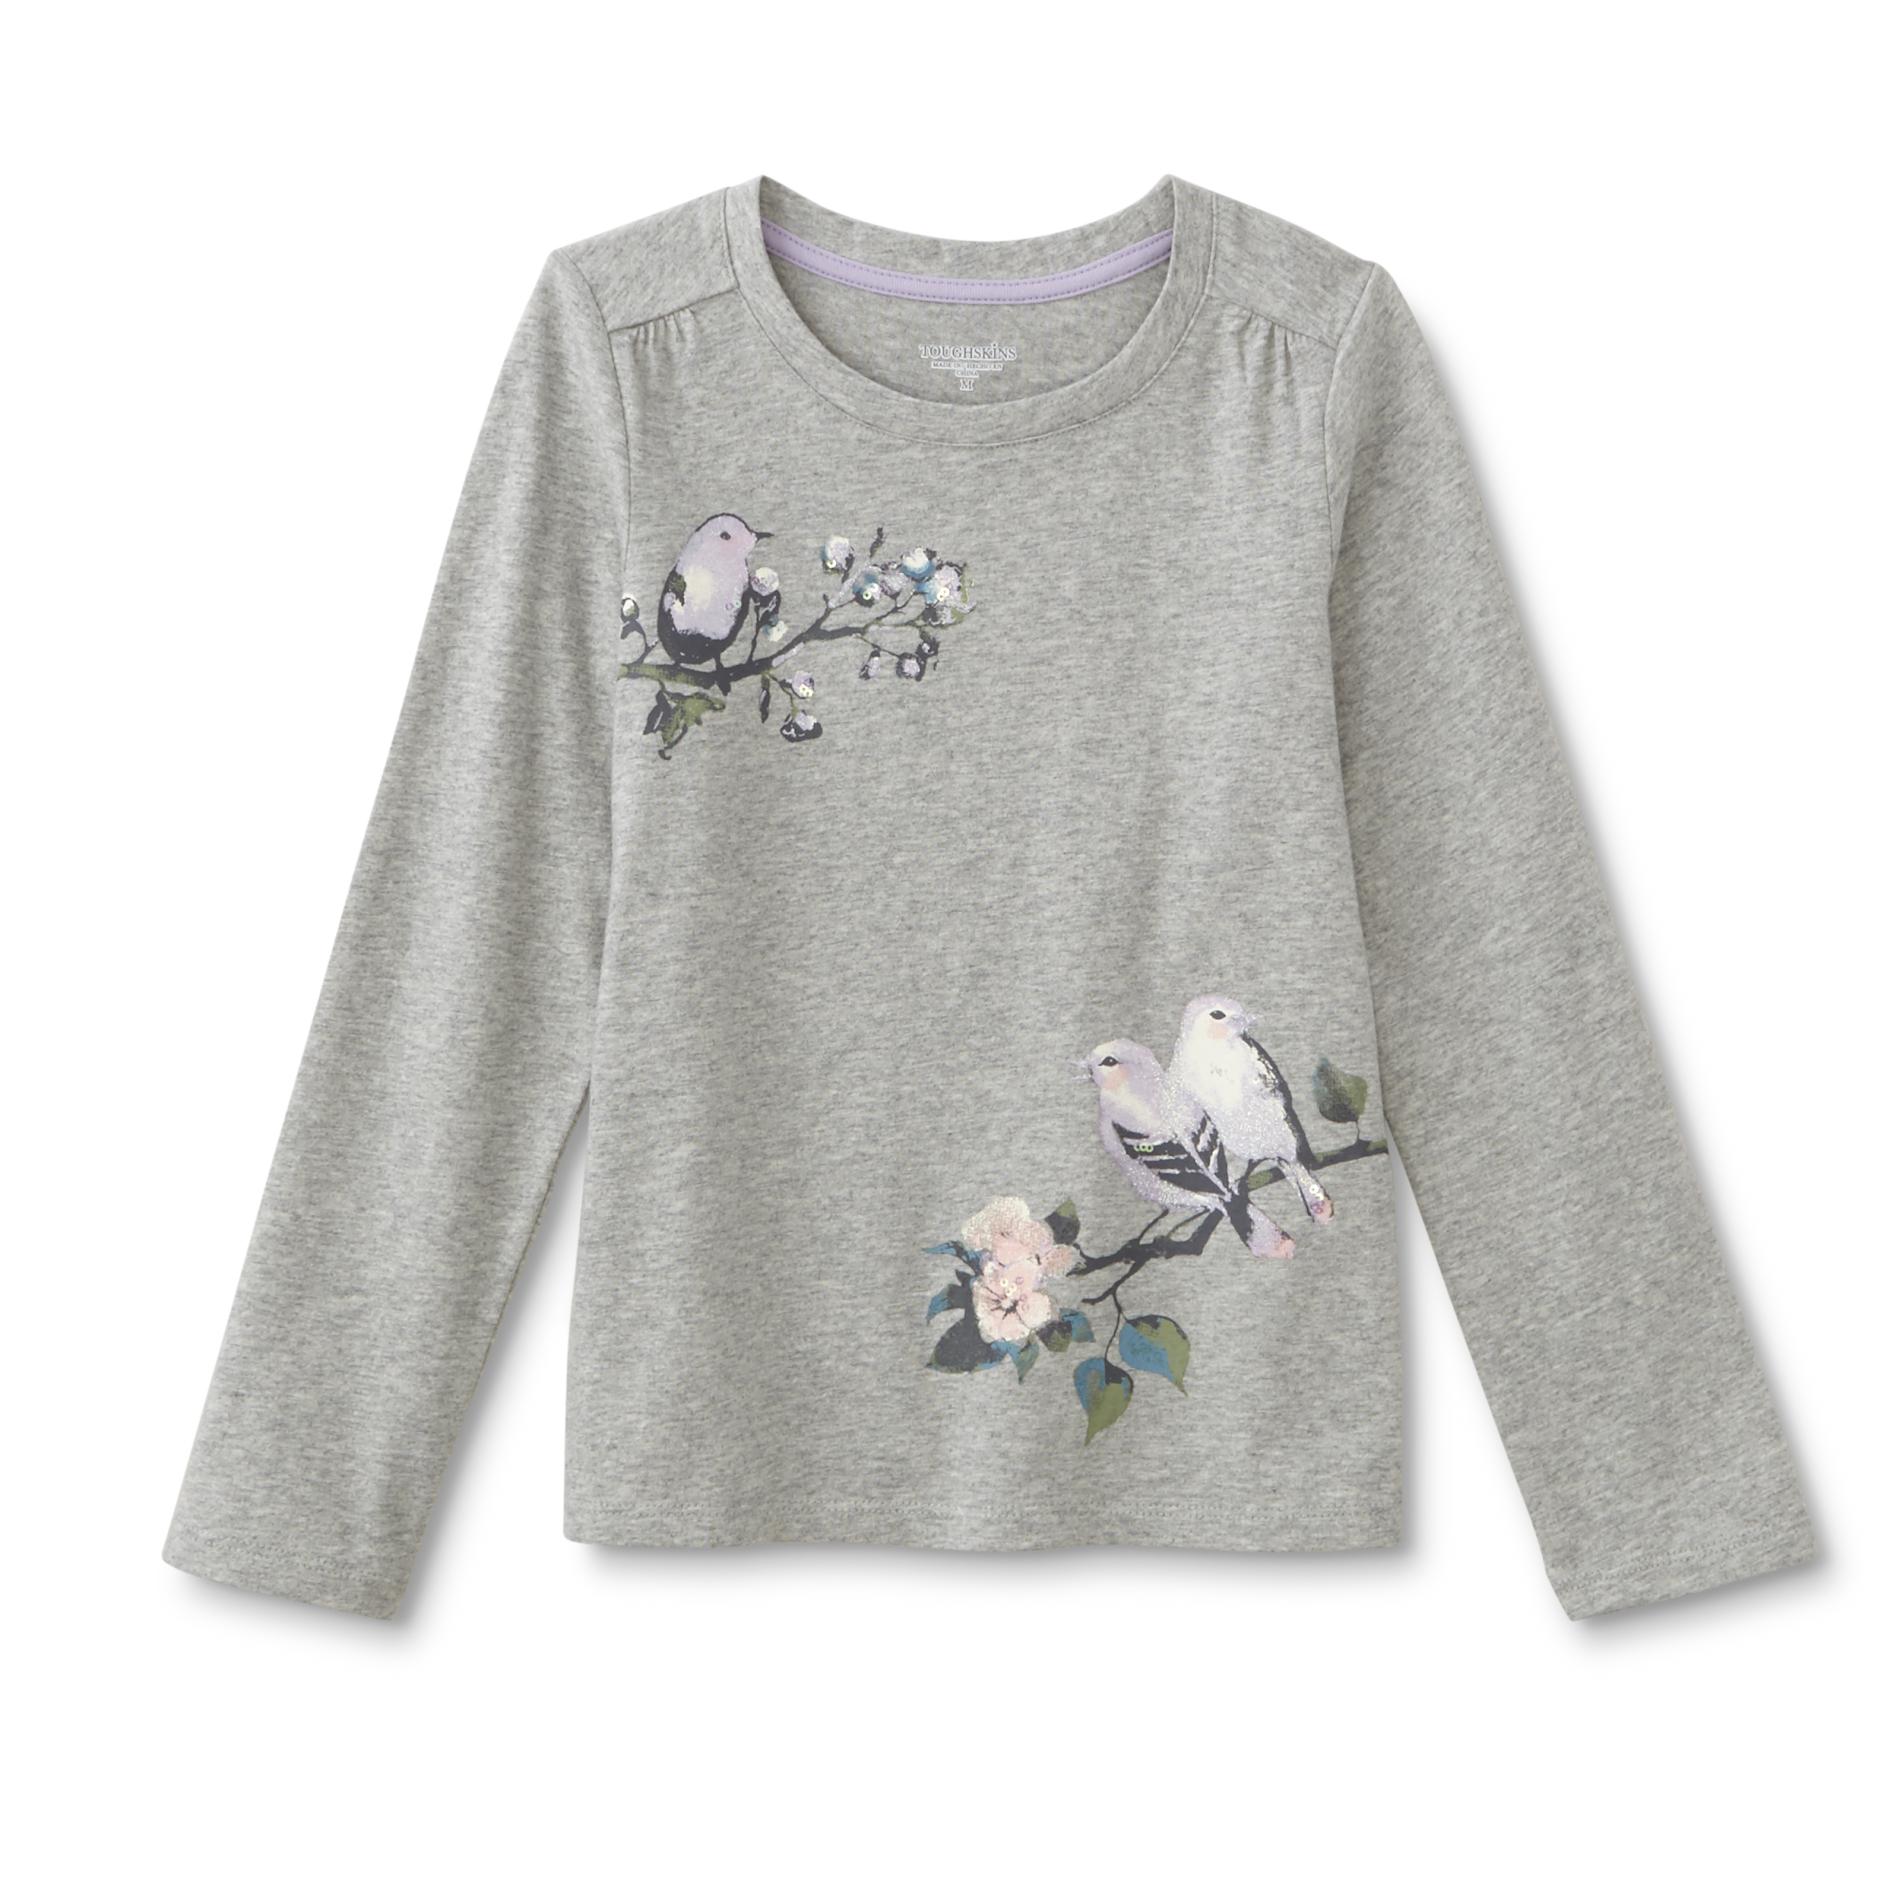 Toughskins Infant & Toddler Girl's Long-Sleeve Graphic T-Shirt - Birds